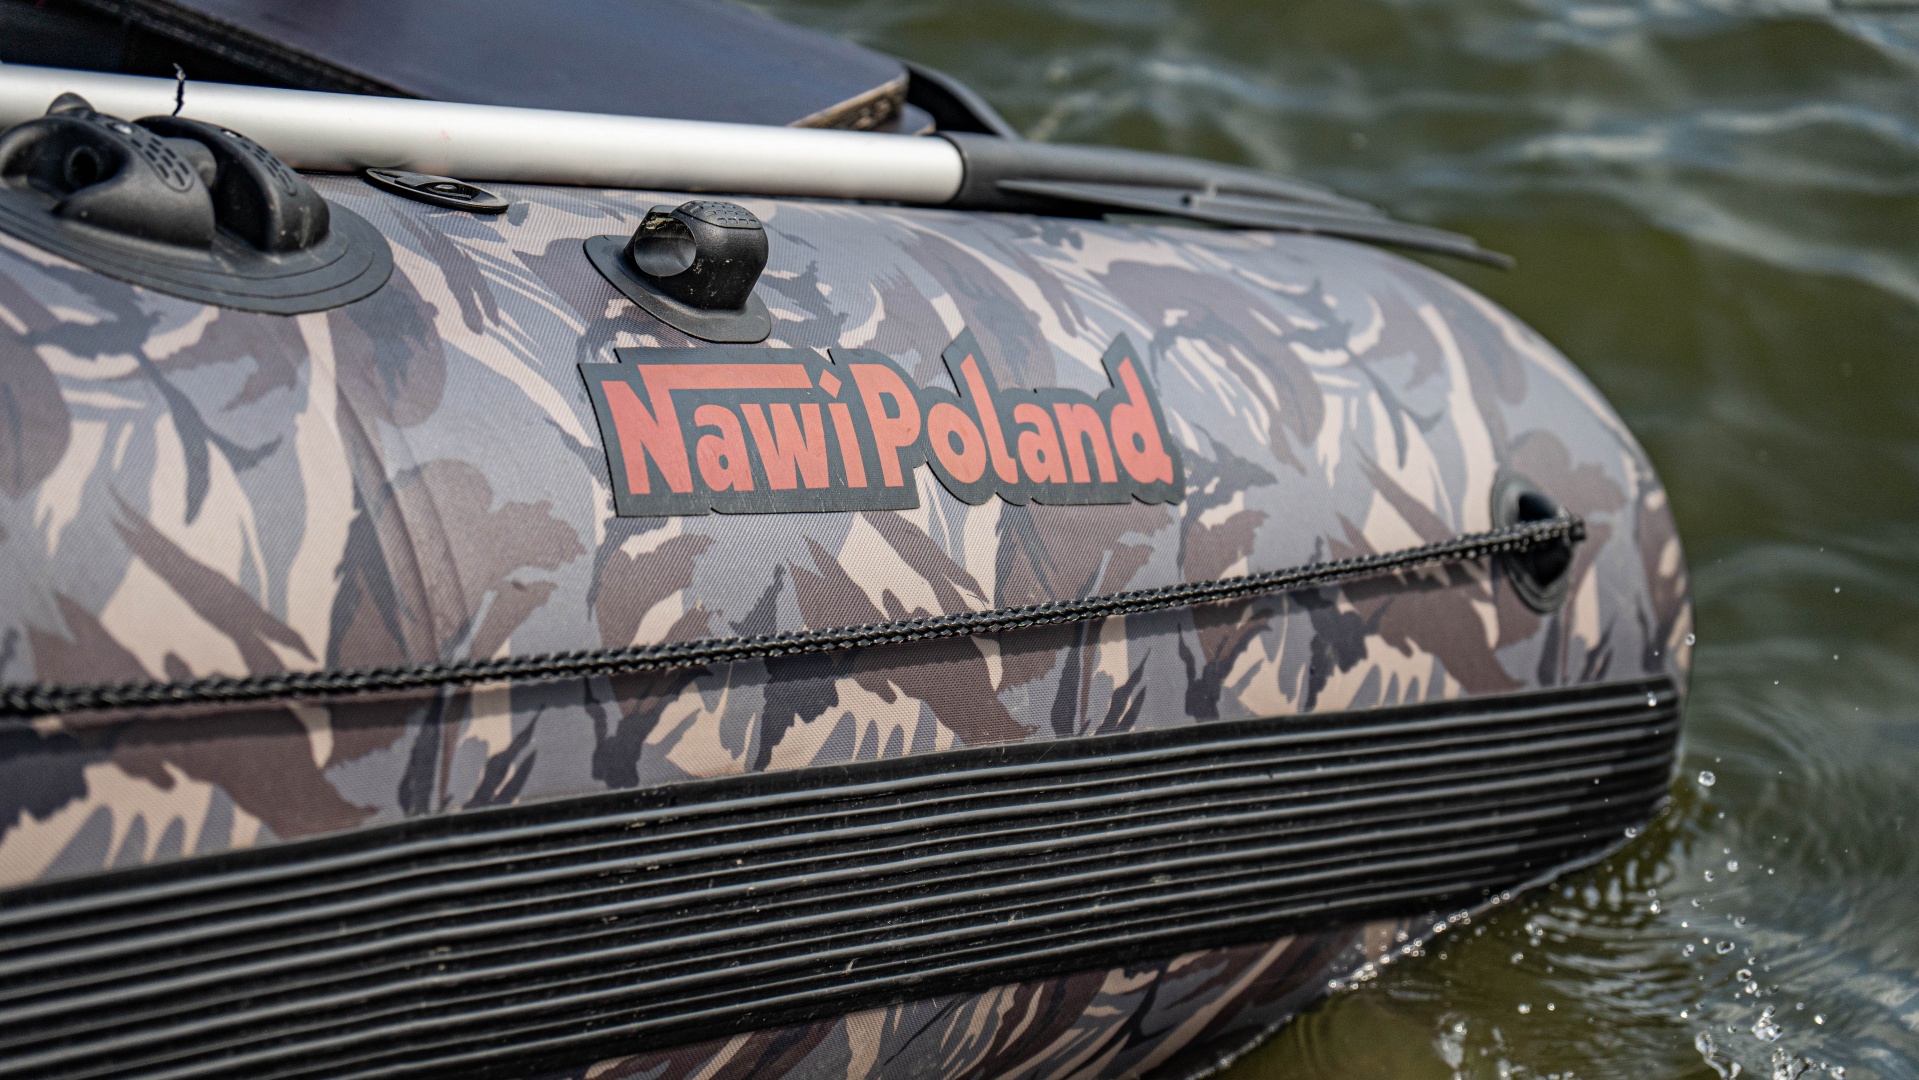 NawiPoland CAT 260 Inflatable Boat  - Catamaran